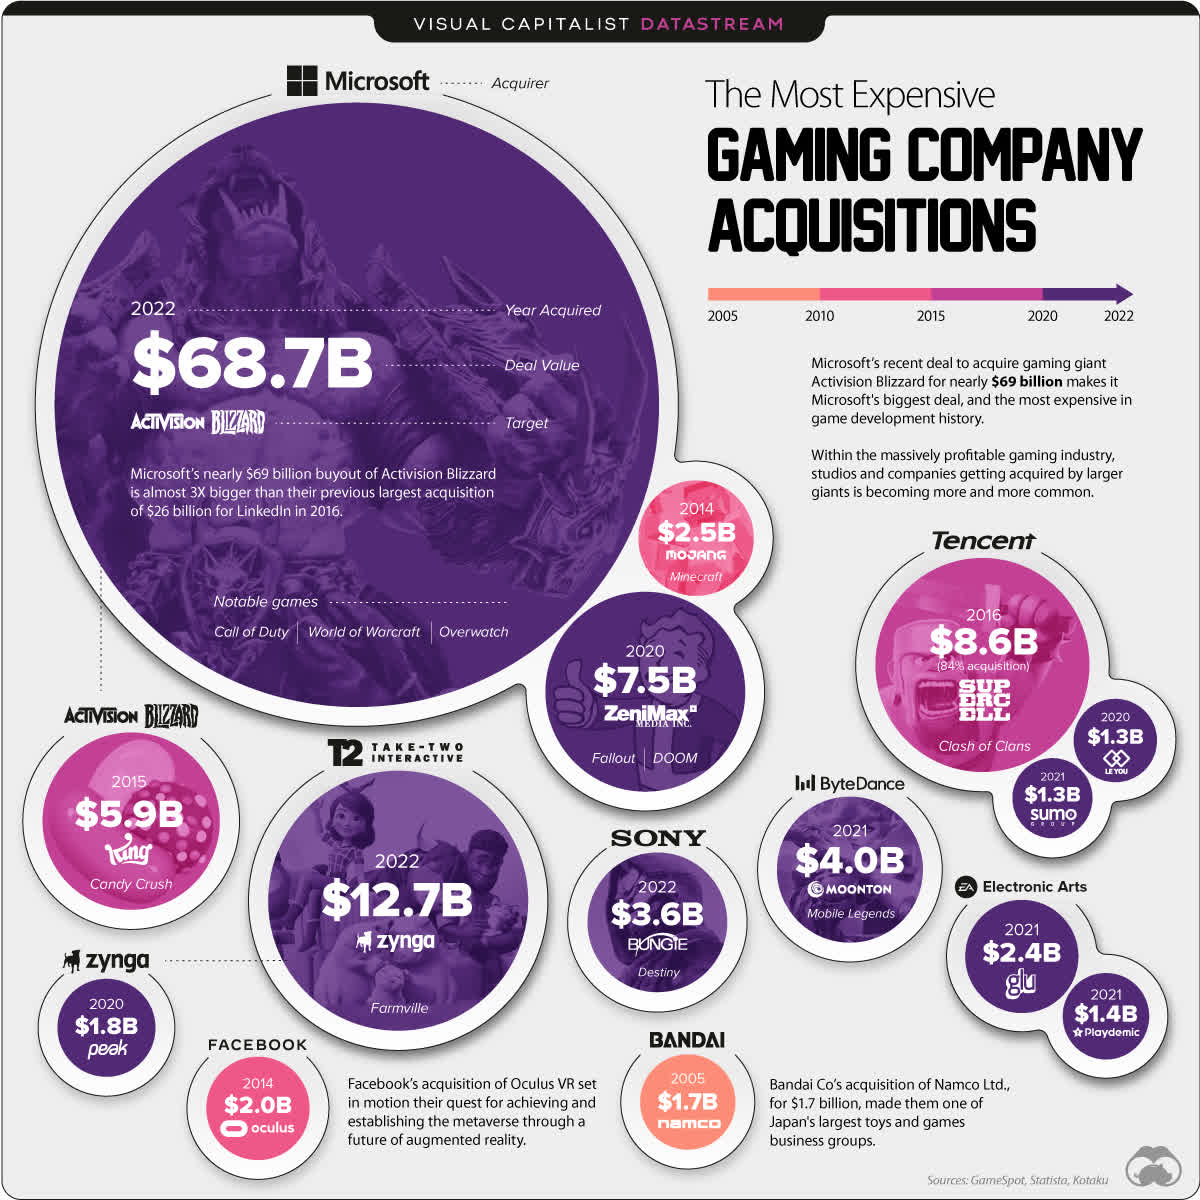 CADE aprova compra da Activision Blizzard pela Microsoft. E agora? -  Podcasts - Canaltech